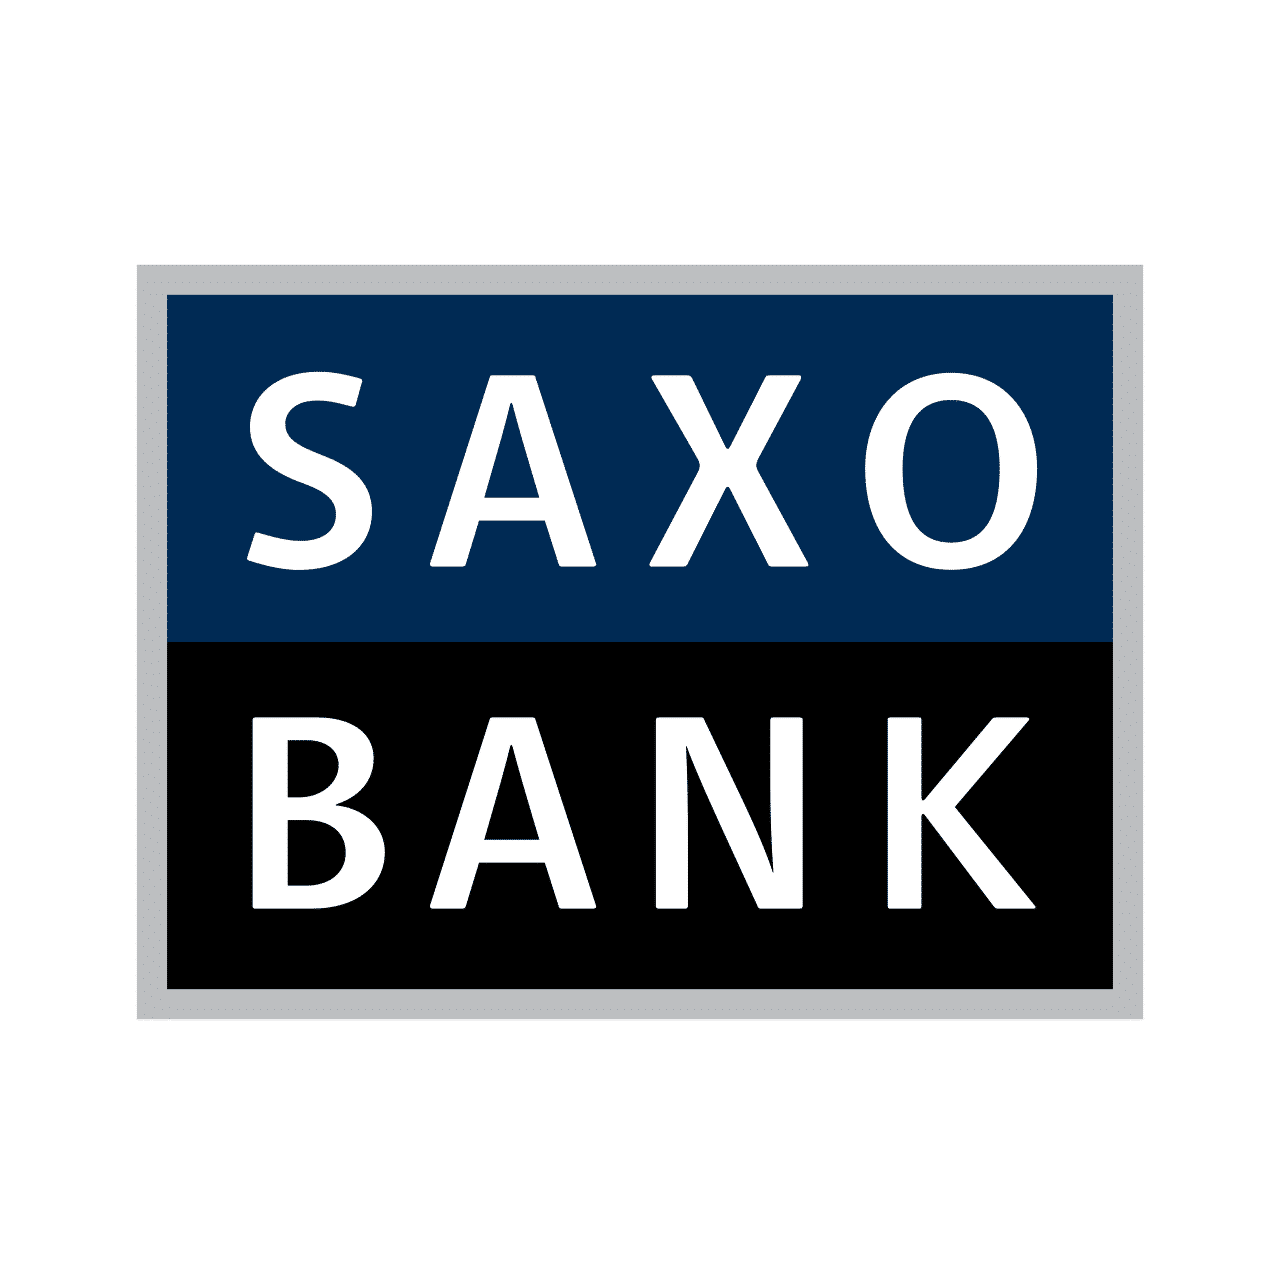 Saxo bank binary options